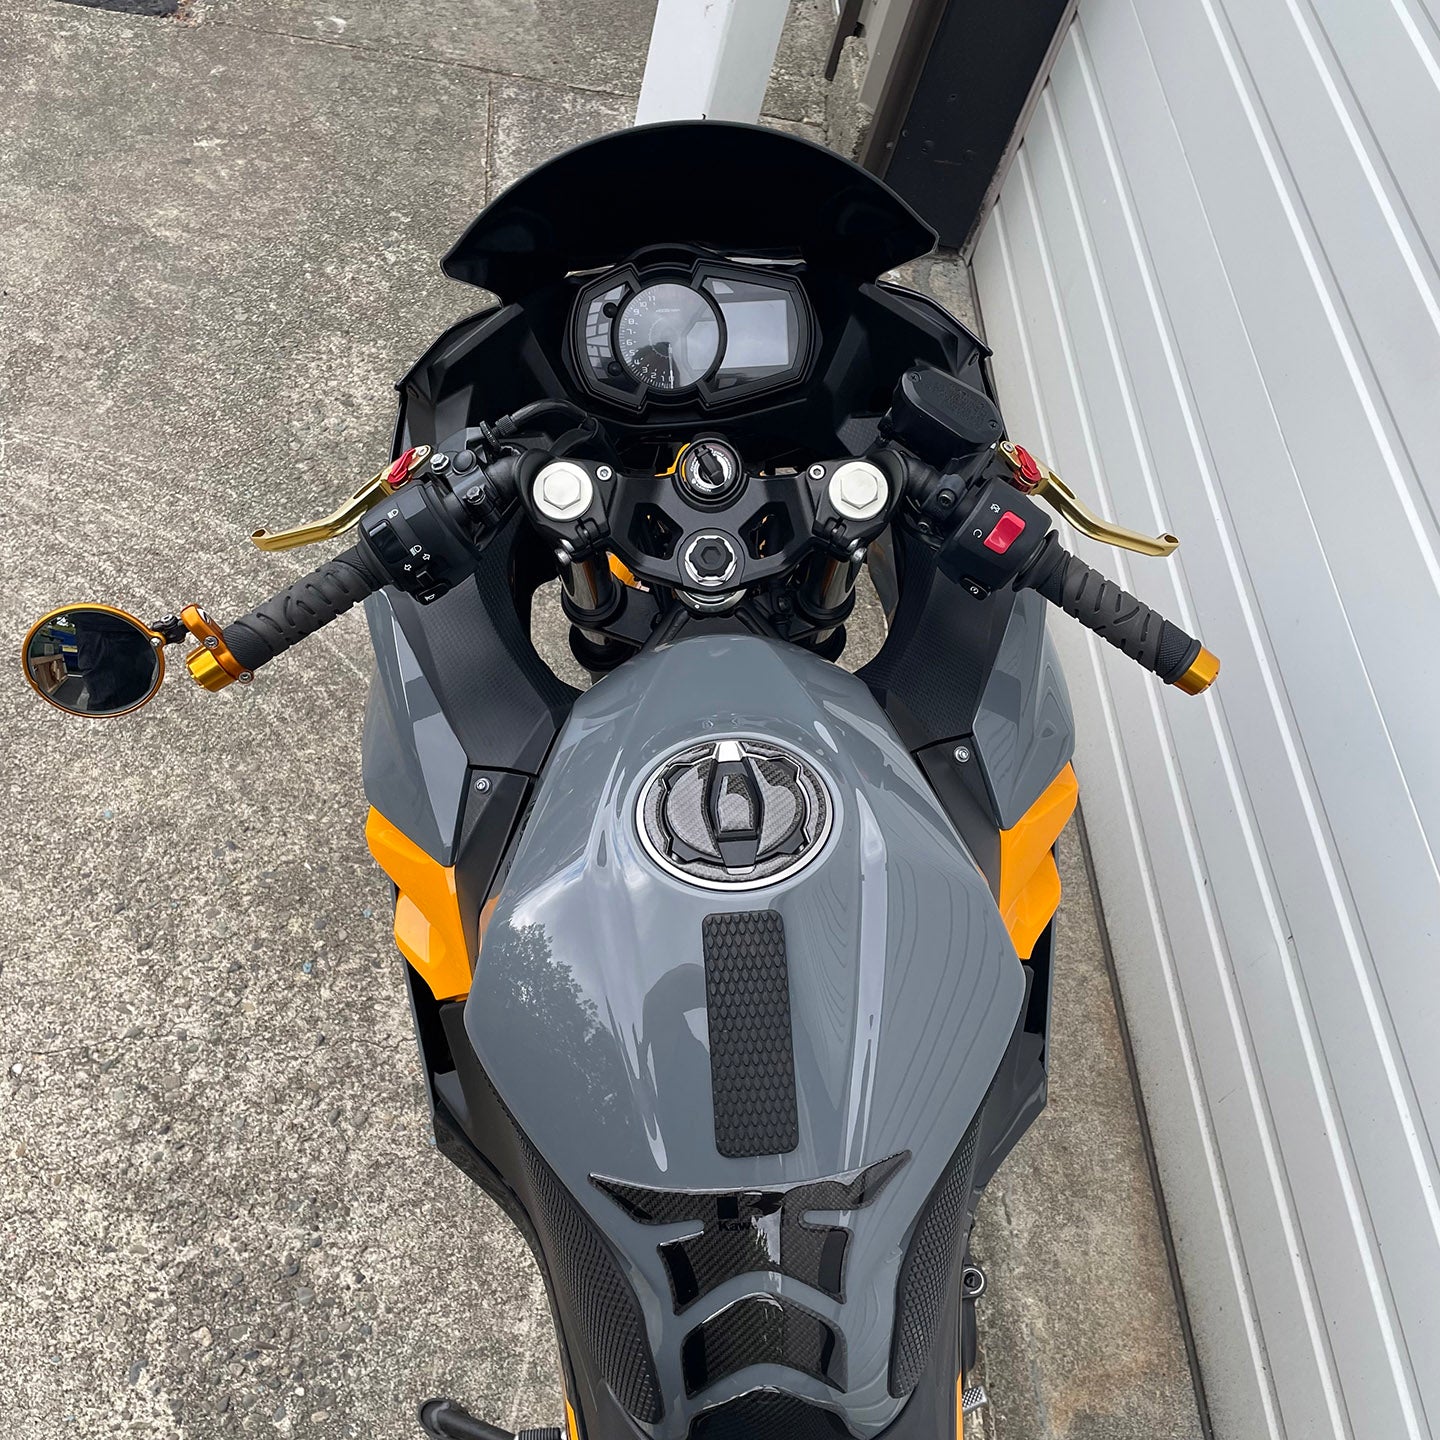 2018 Kawasaki Ninja 400 ABS (6,872 Miles)